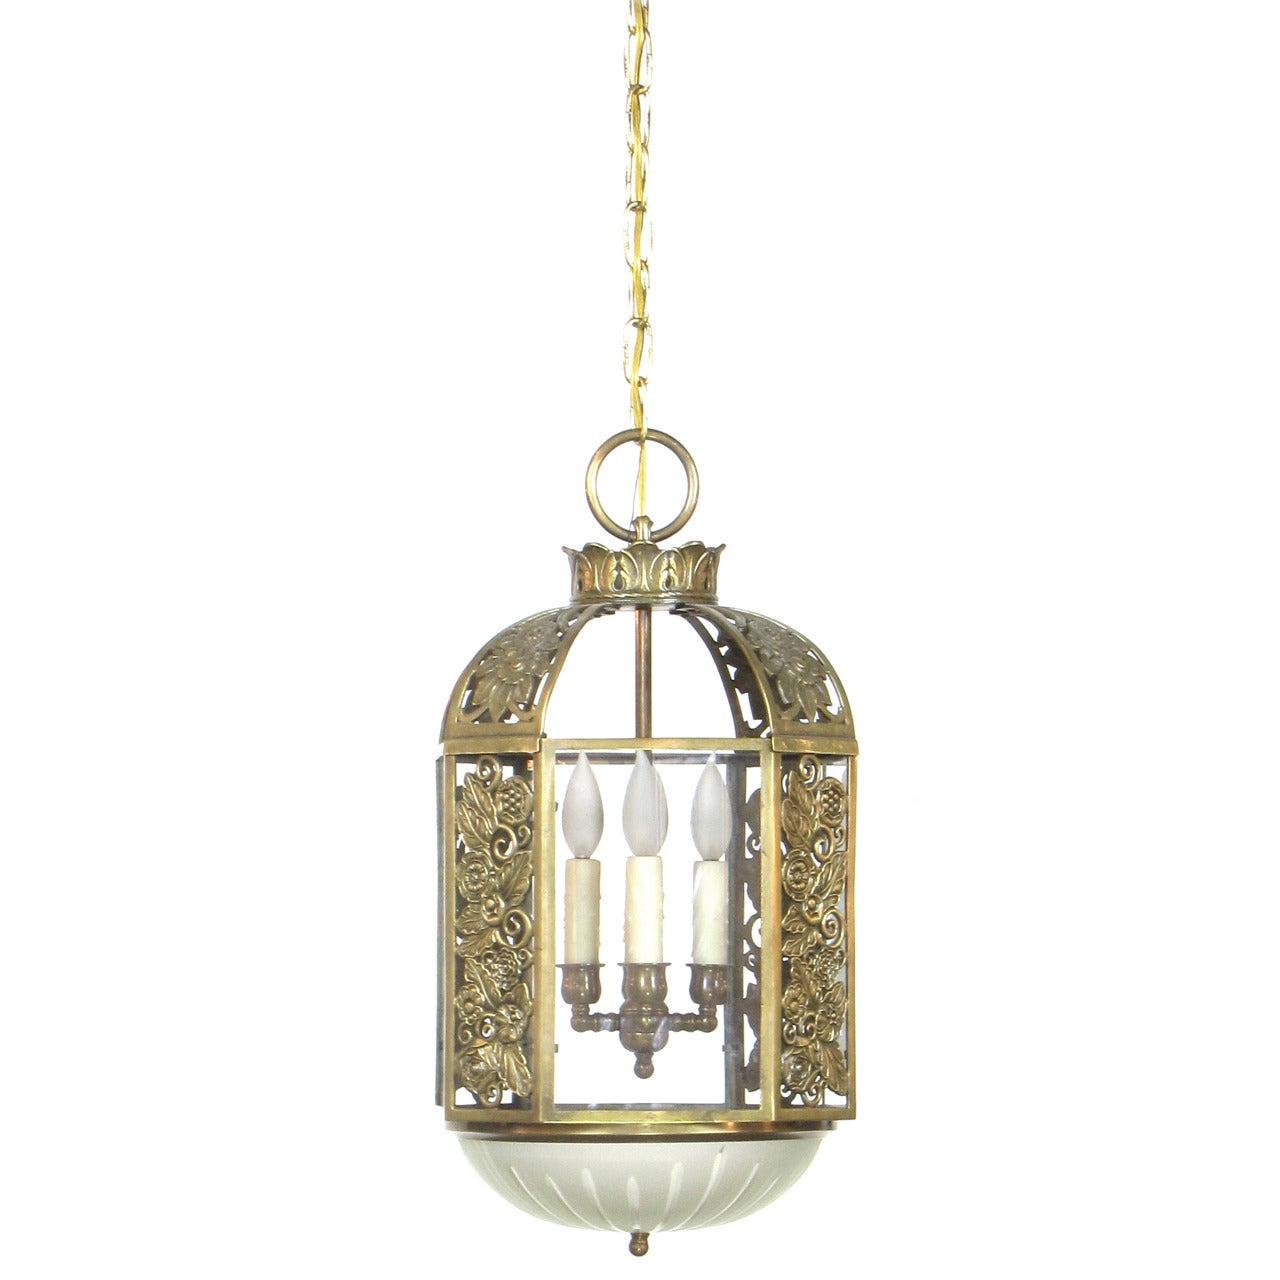 Brass Lantern with Cast Floral Design For Sale